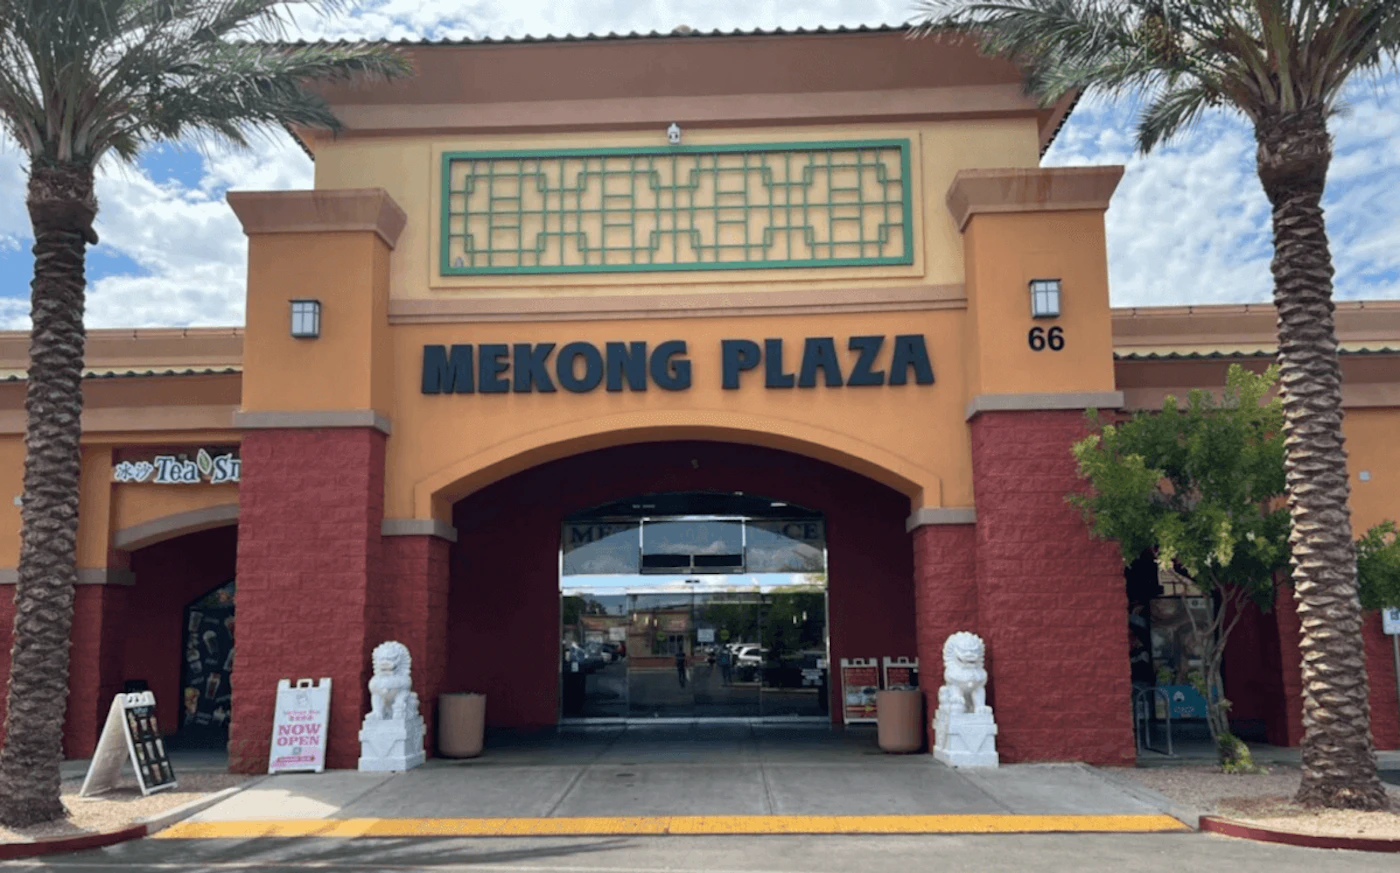 Mekong Plaza in Mesa (Photo by Robert Gundran)